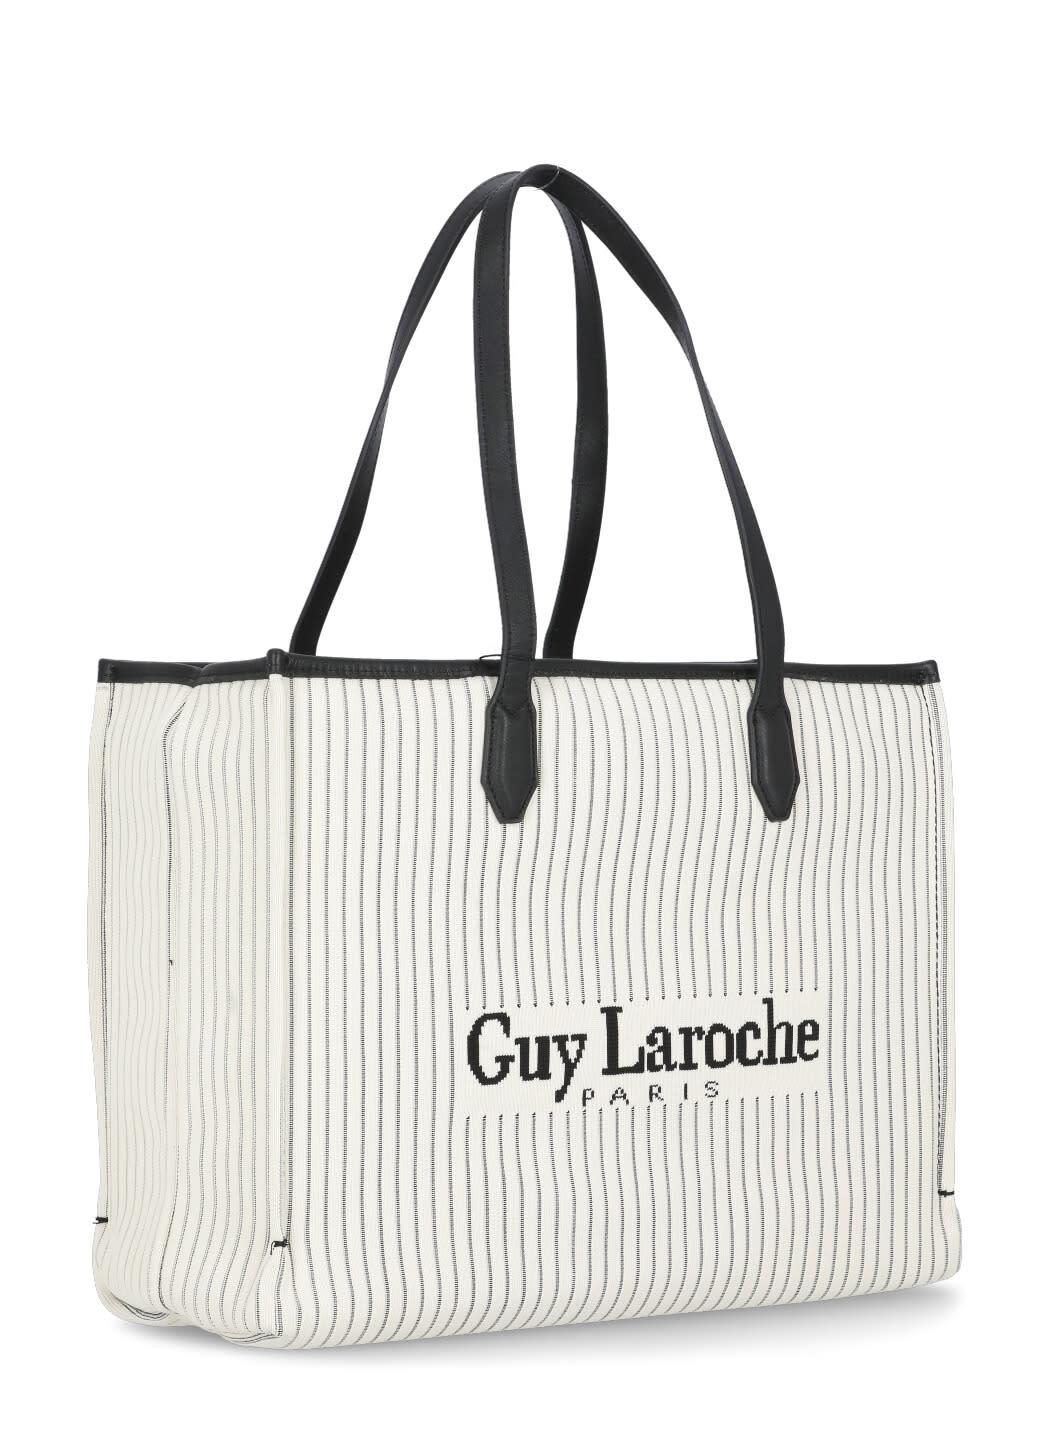 Guy Laroche Shoulder Bag With Logo In Black